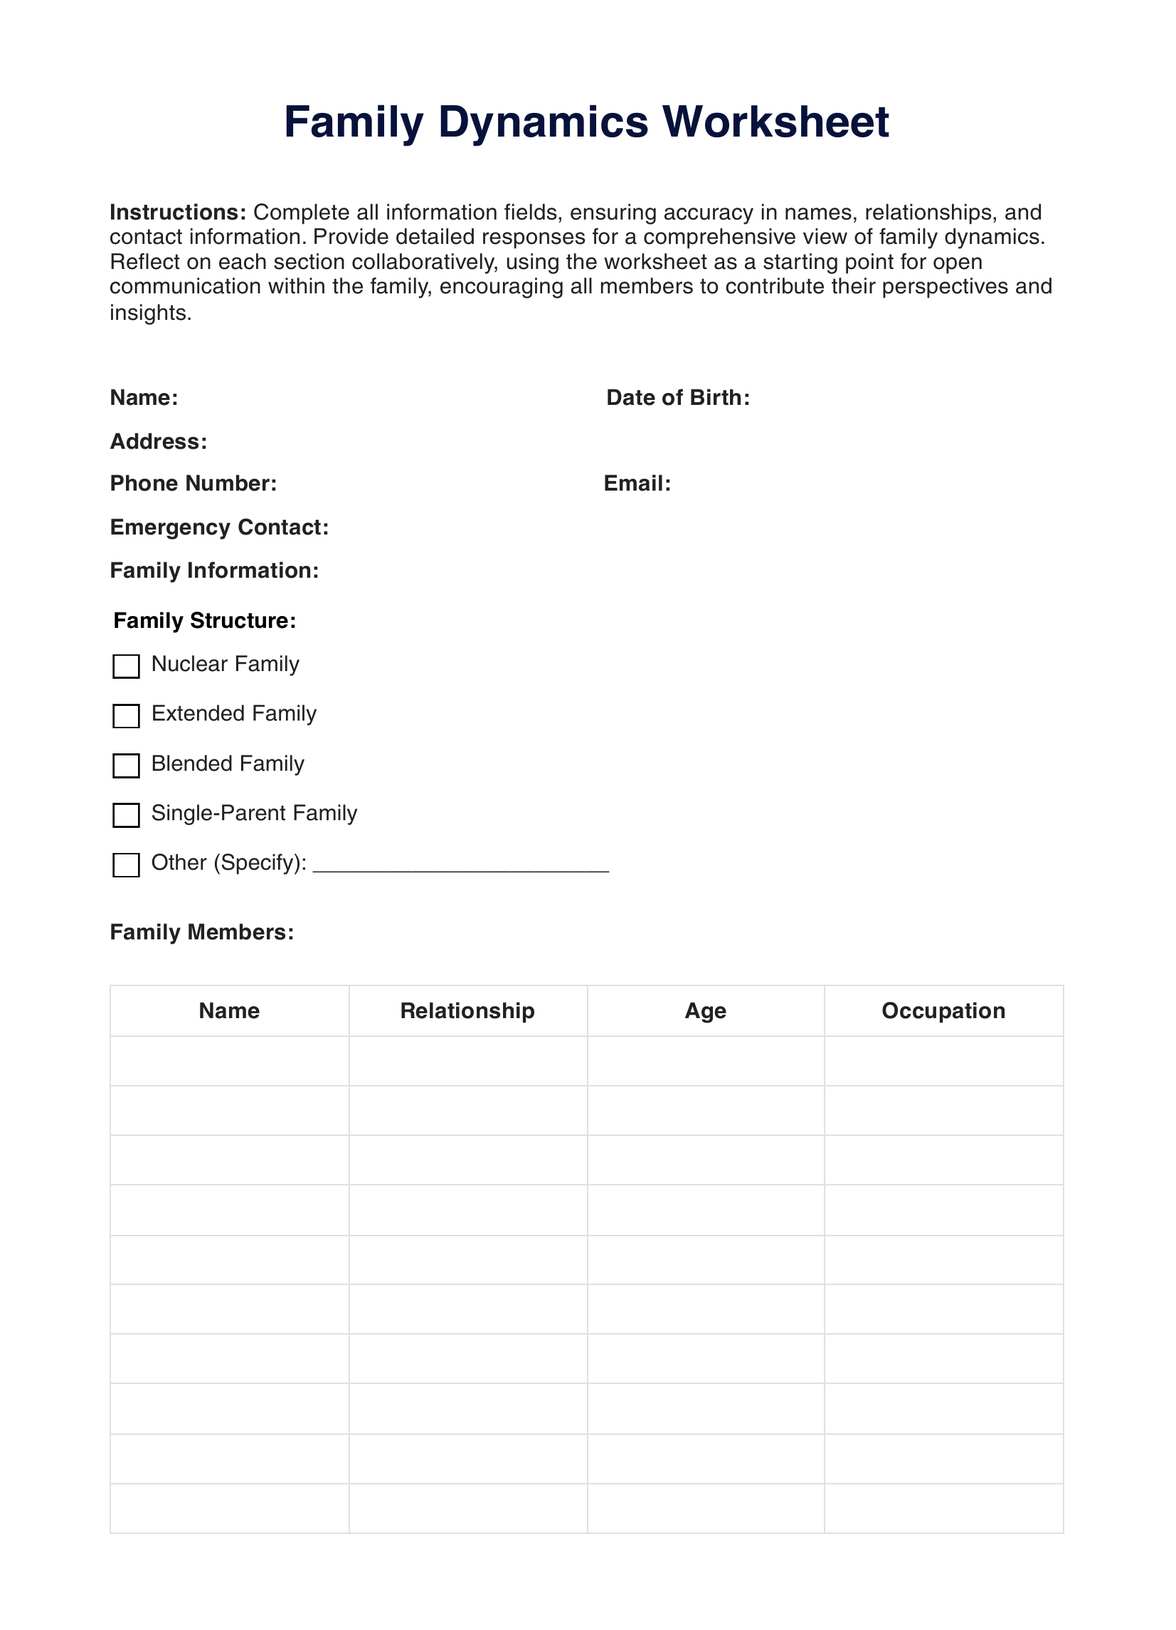 Family Dynamics Worksheet PDF PDF Example